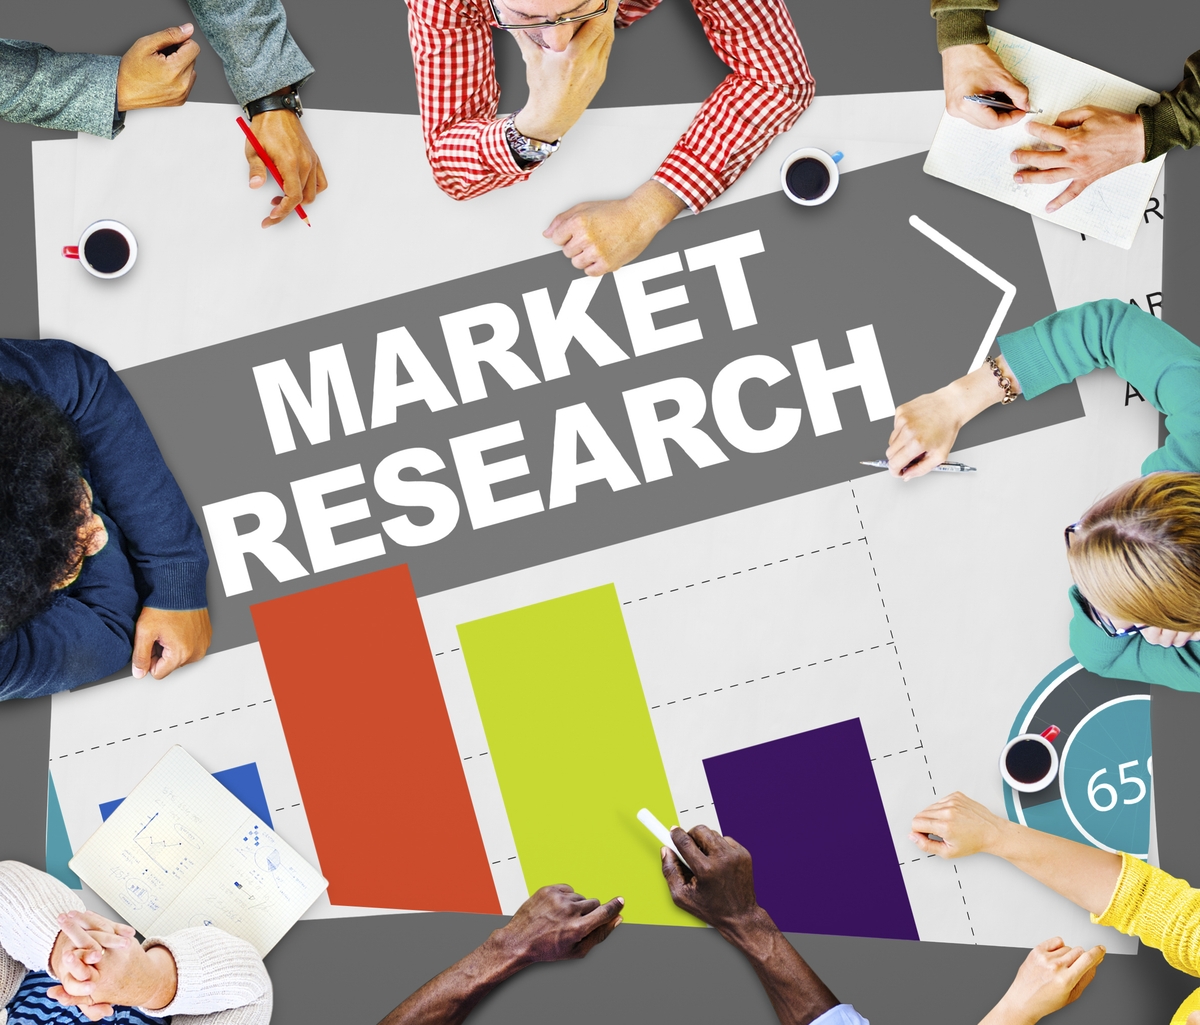 market research & analysis